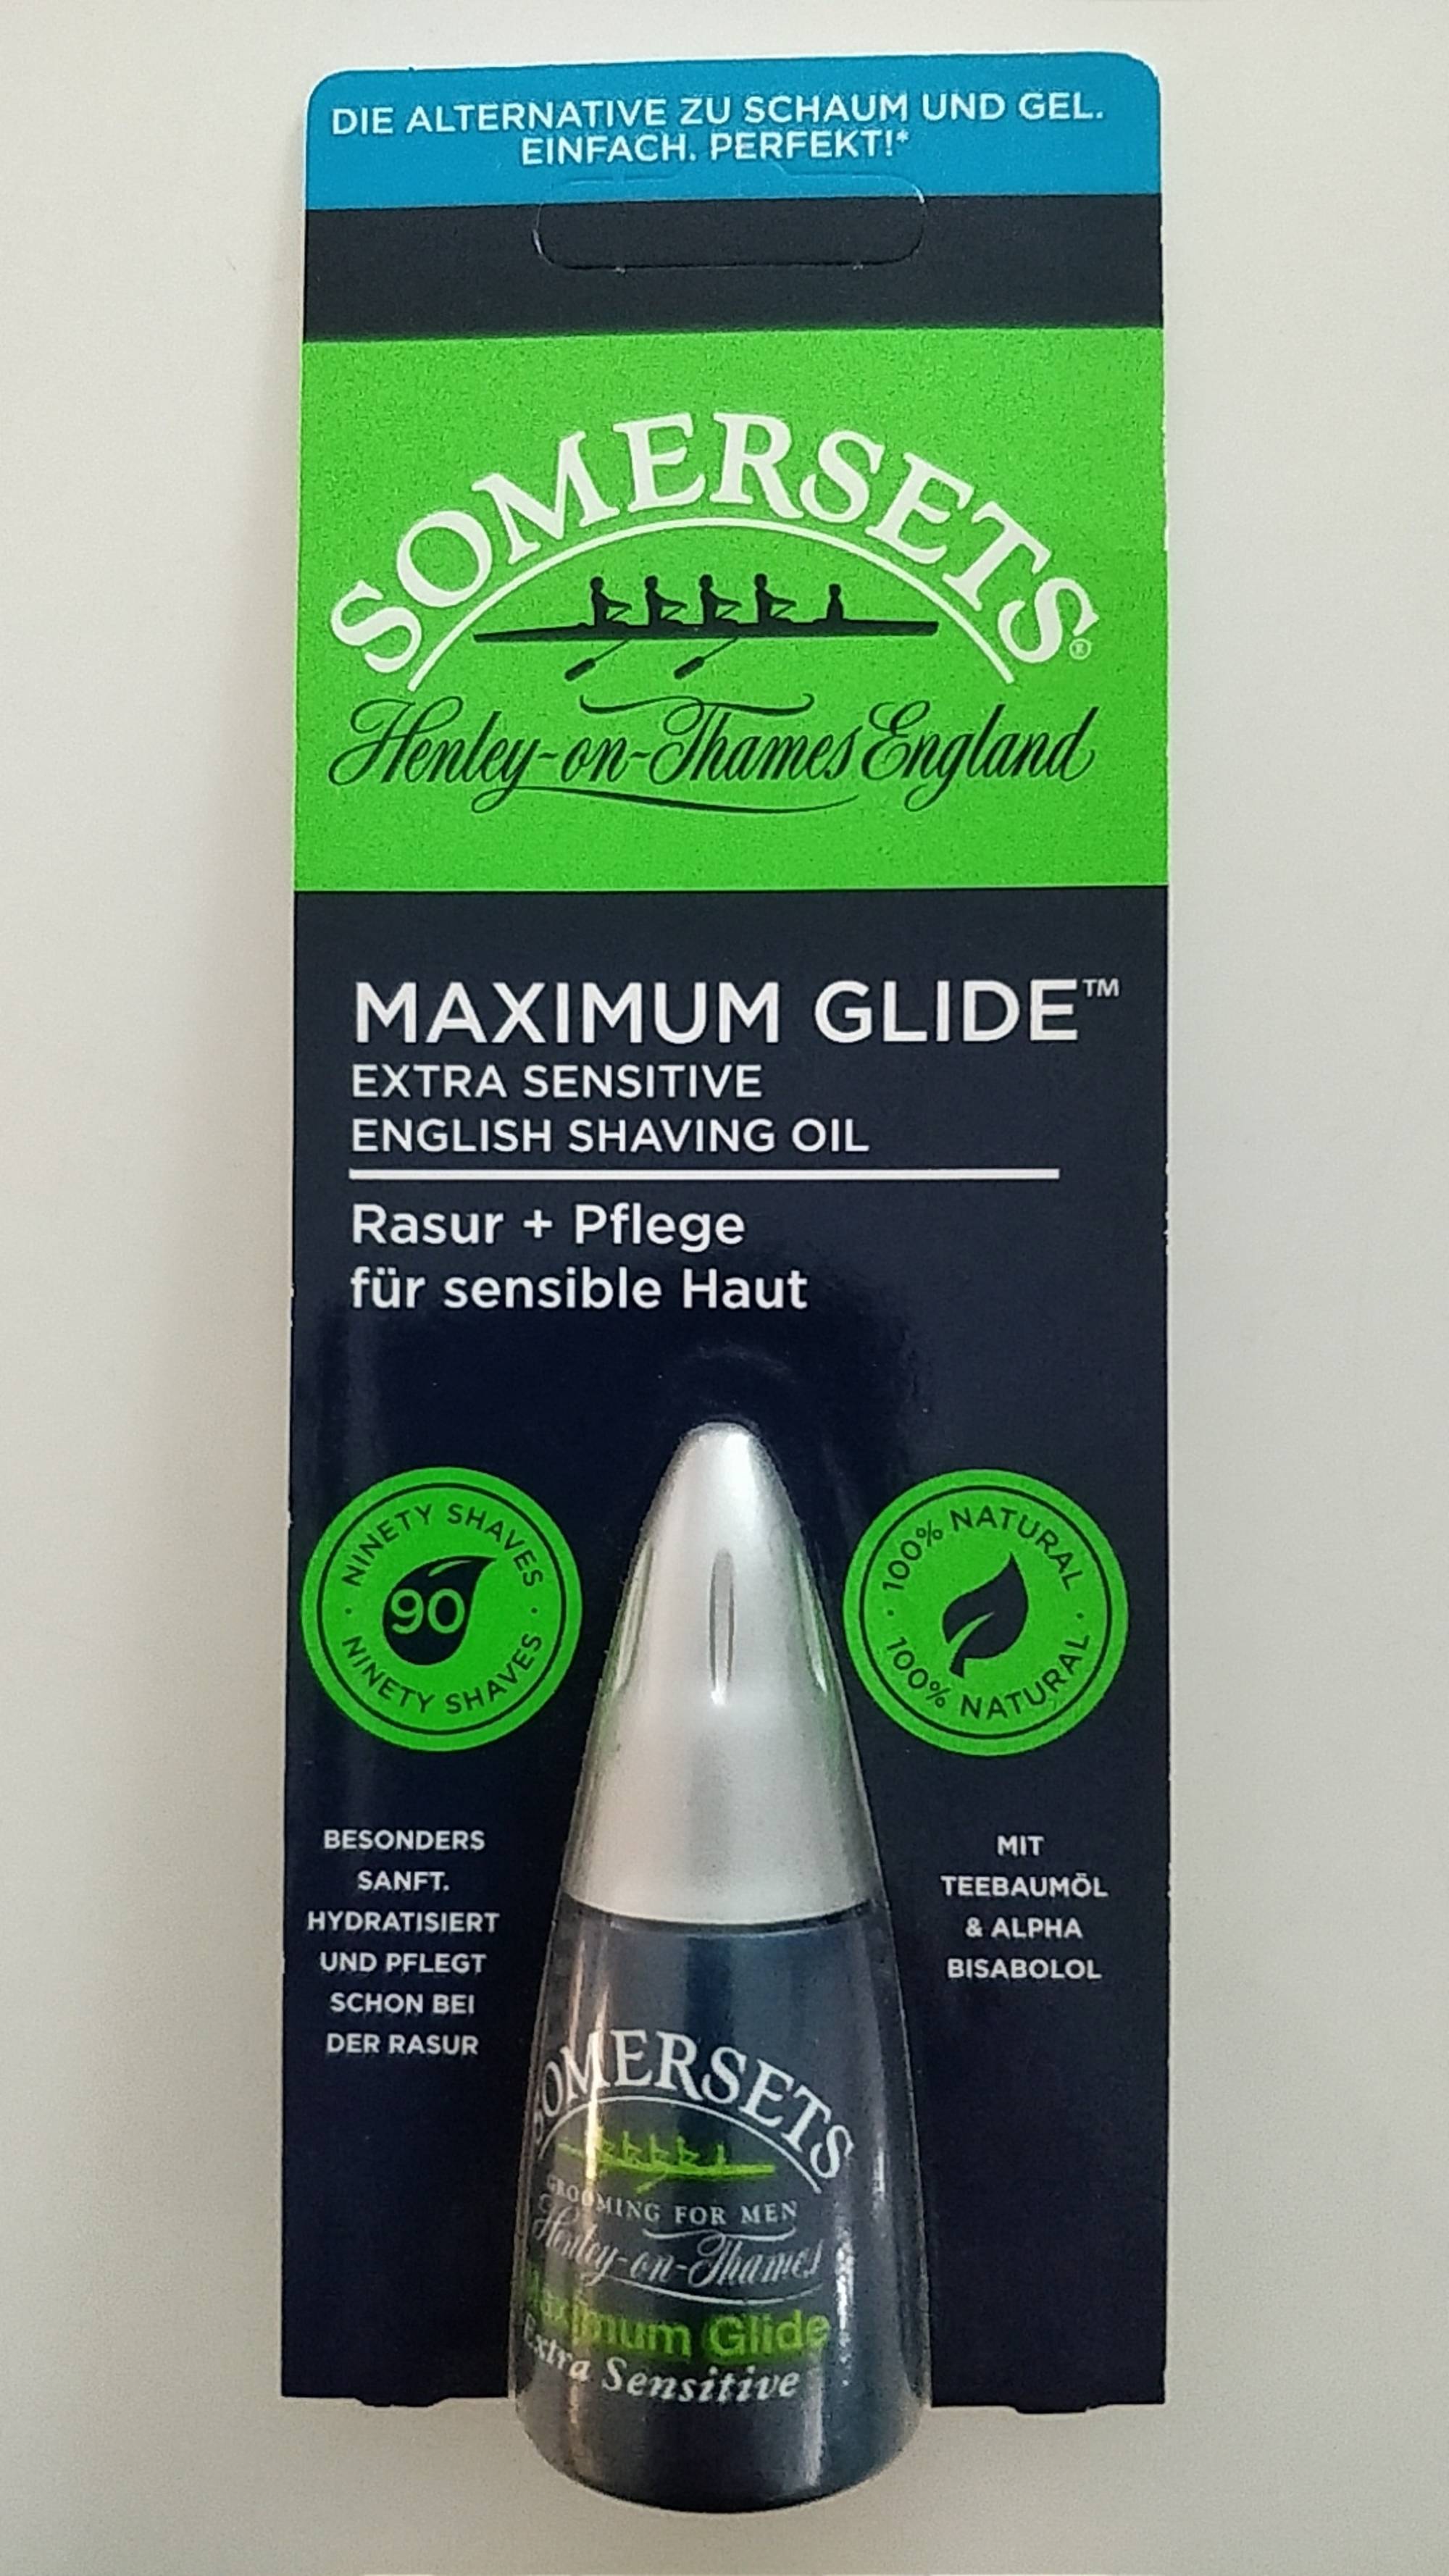 SOMERSETS - Maximum glide - Extra Sensitive Shaving Oil